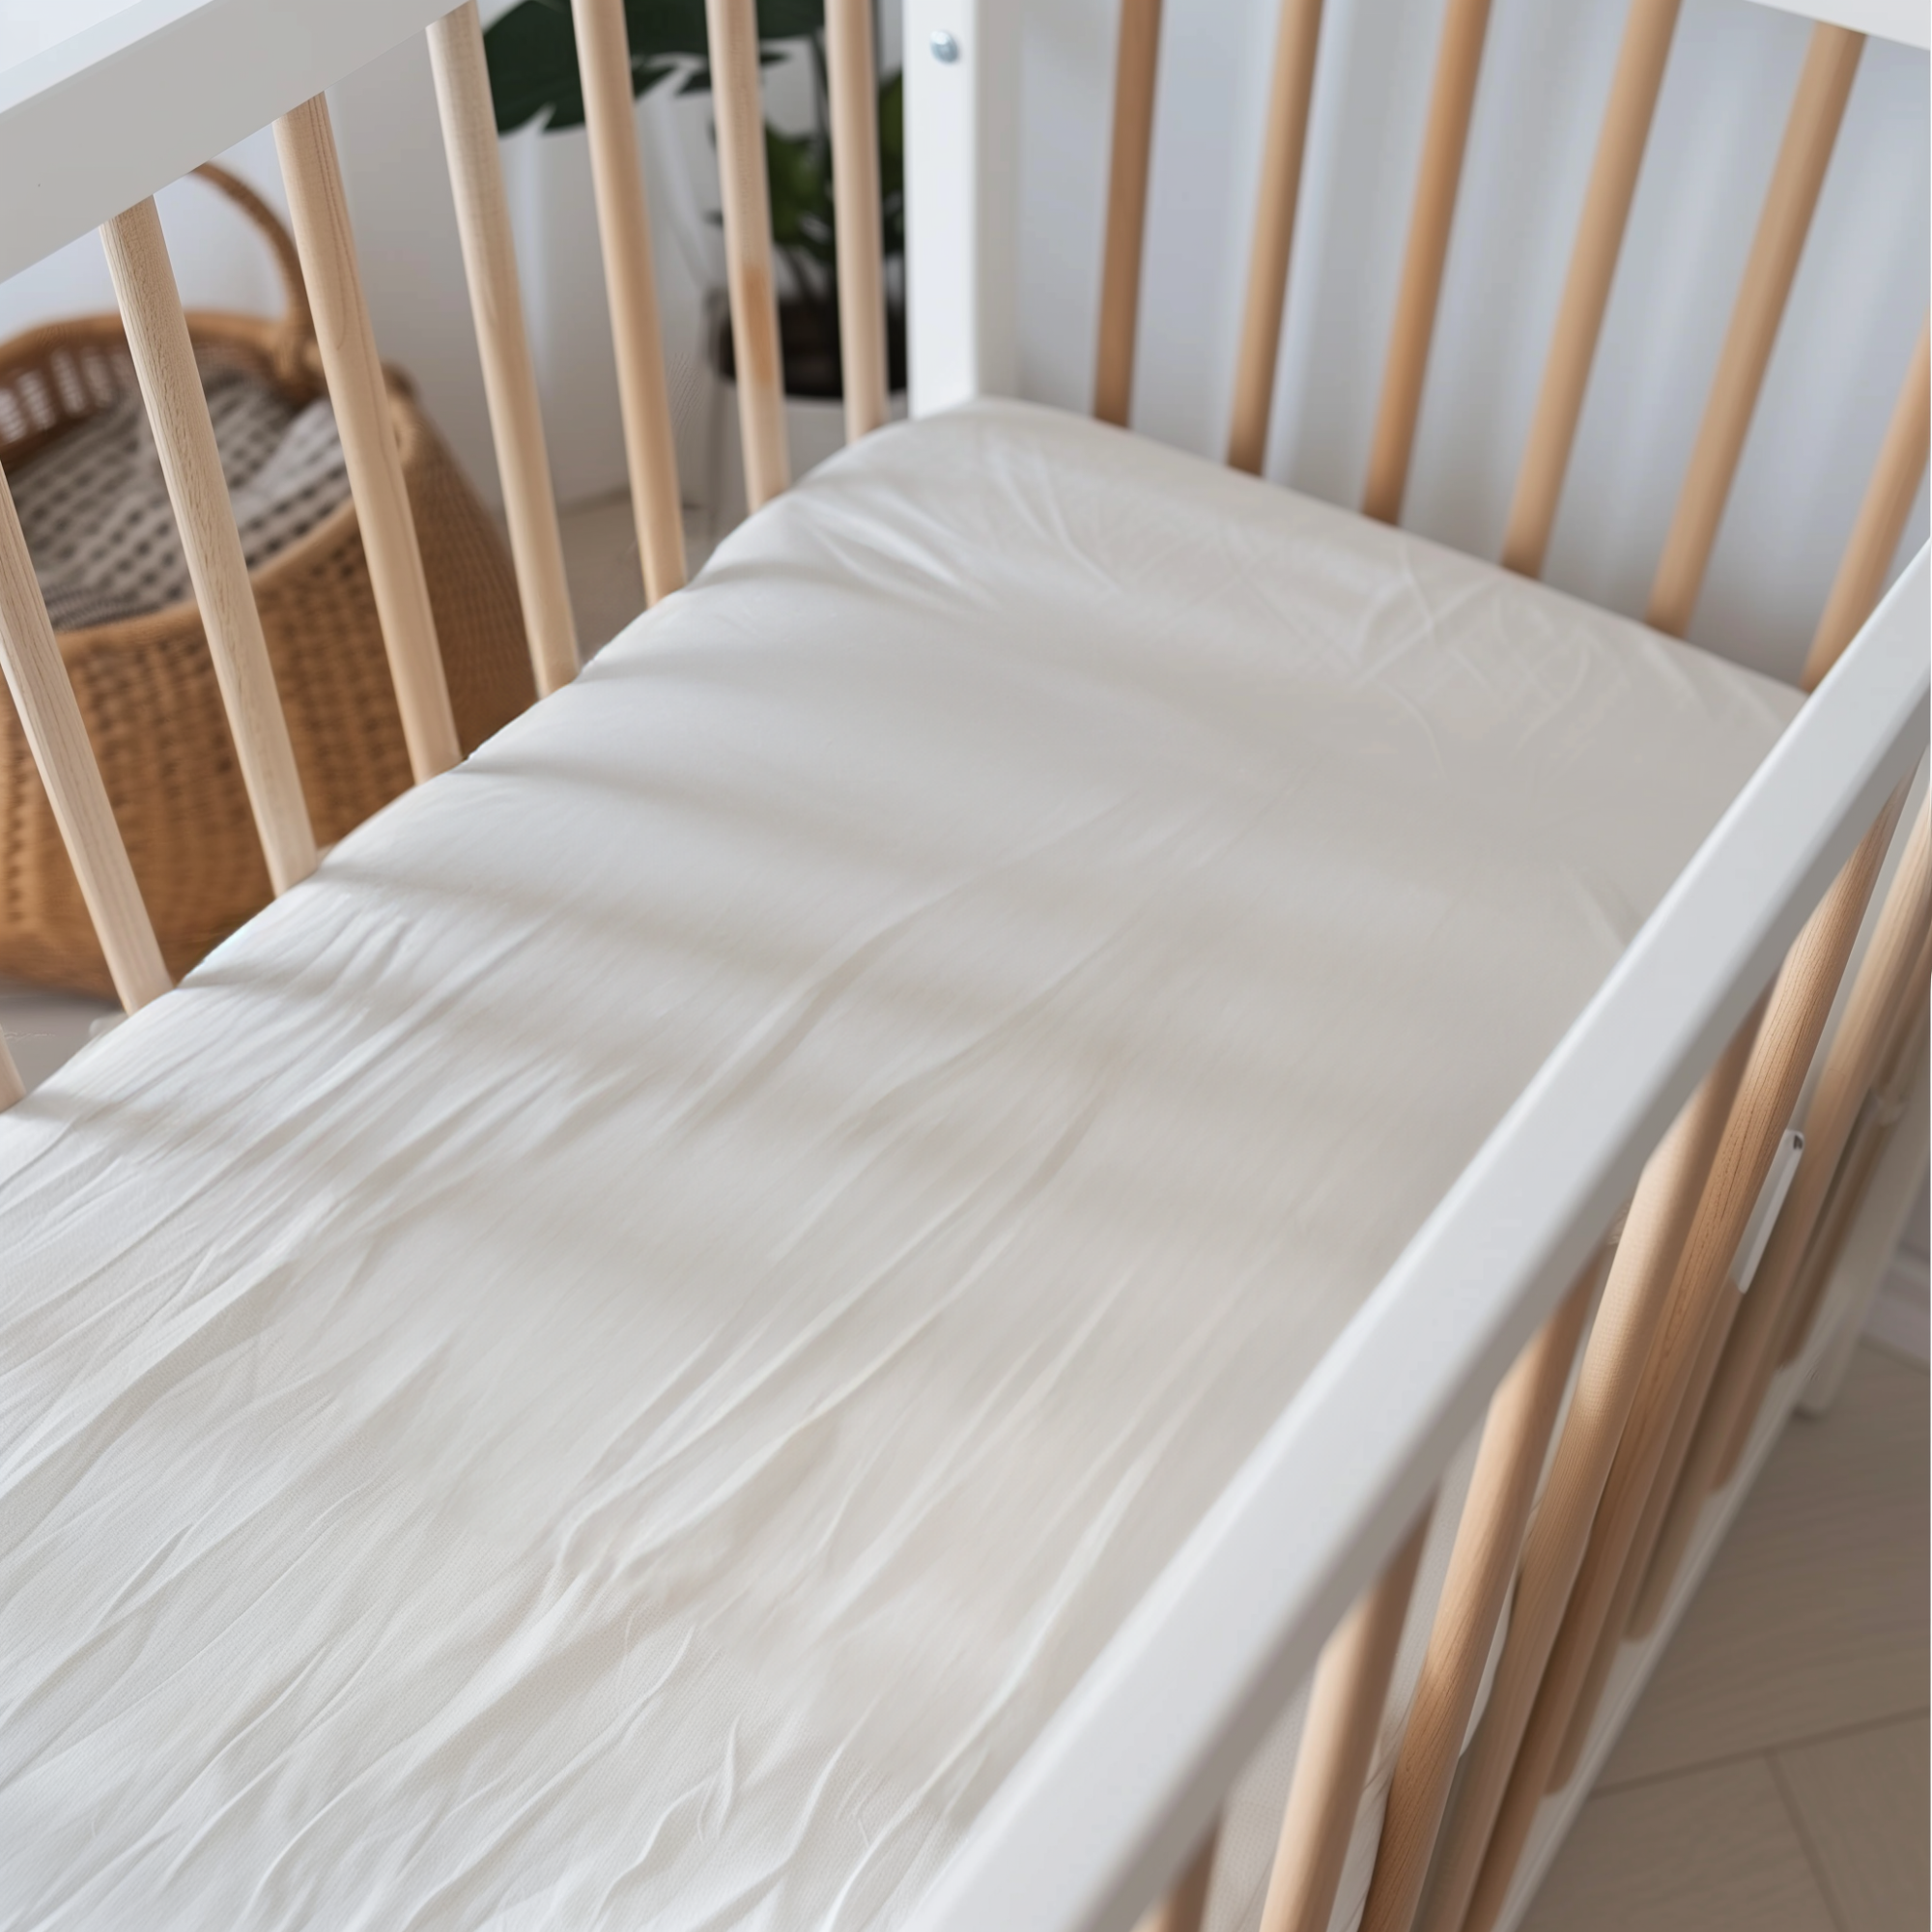 Linen Flat Sheet for baby Crib